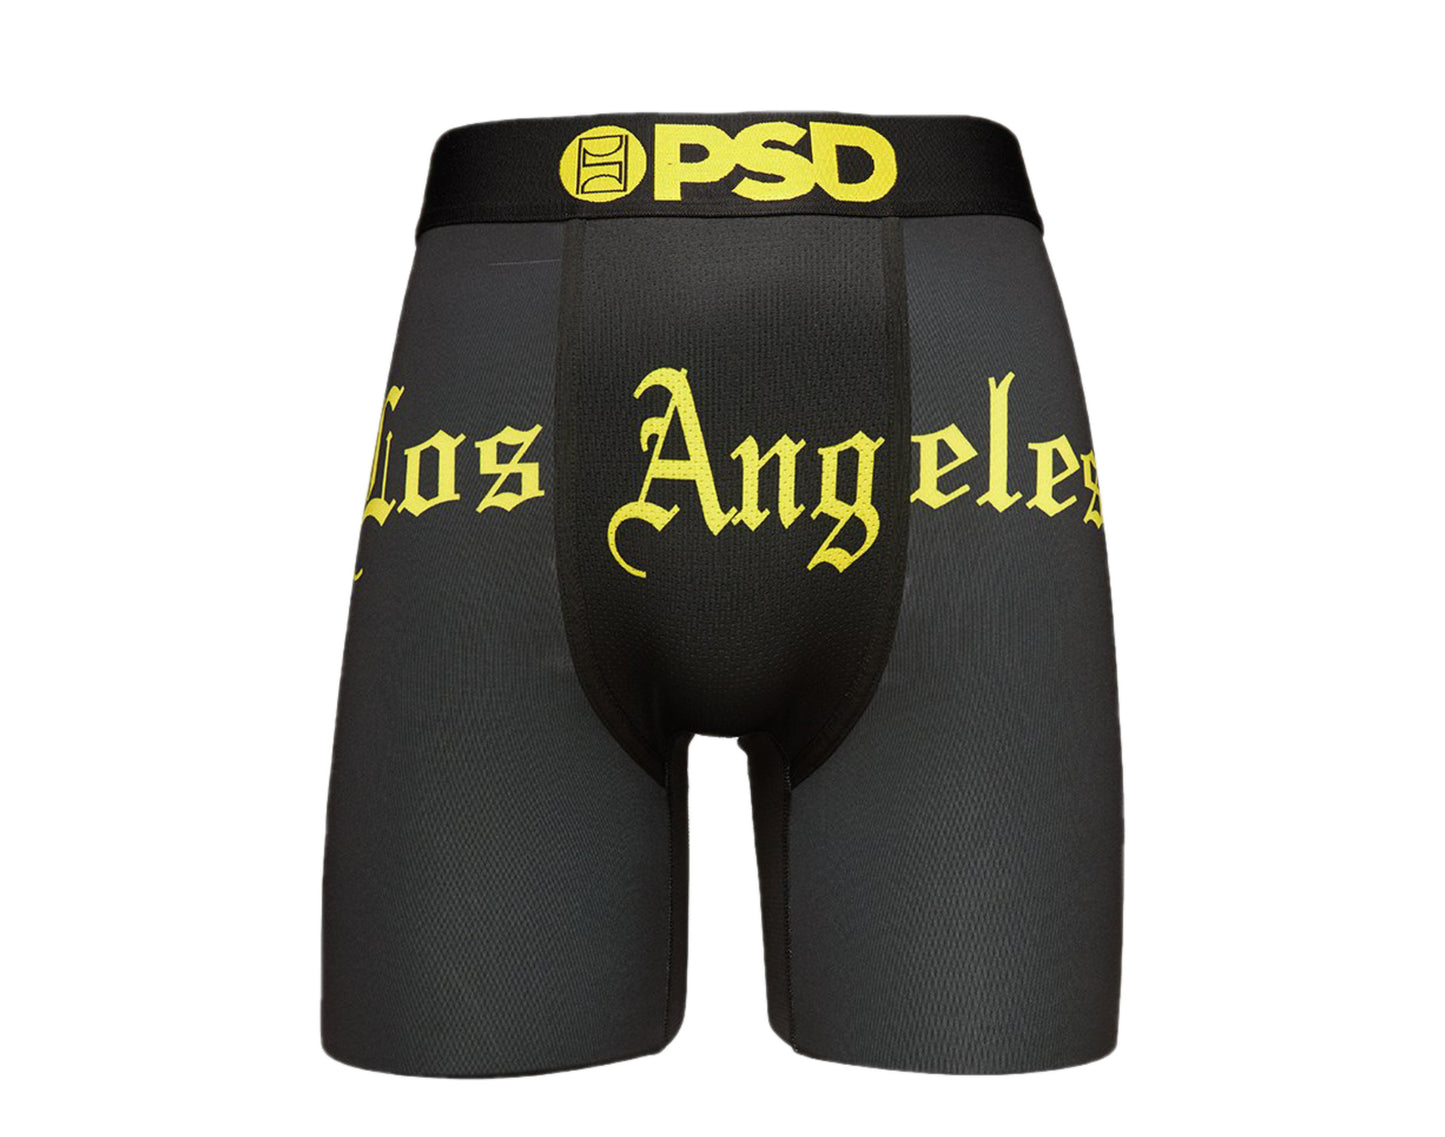 PSD LA Old English Boxer Briefs Men's Underwear